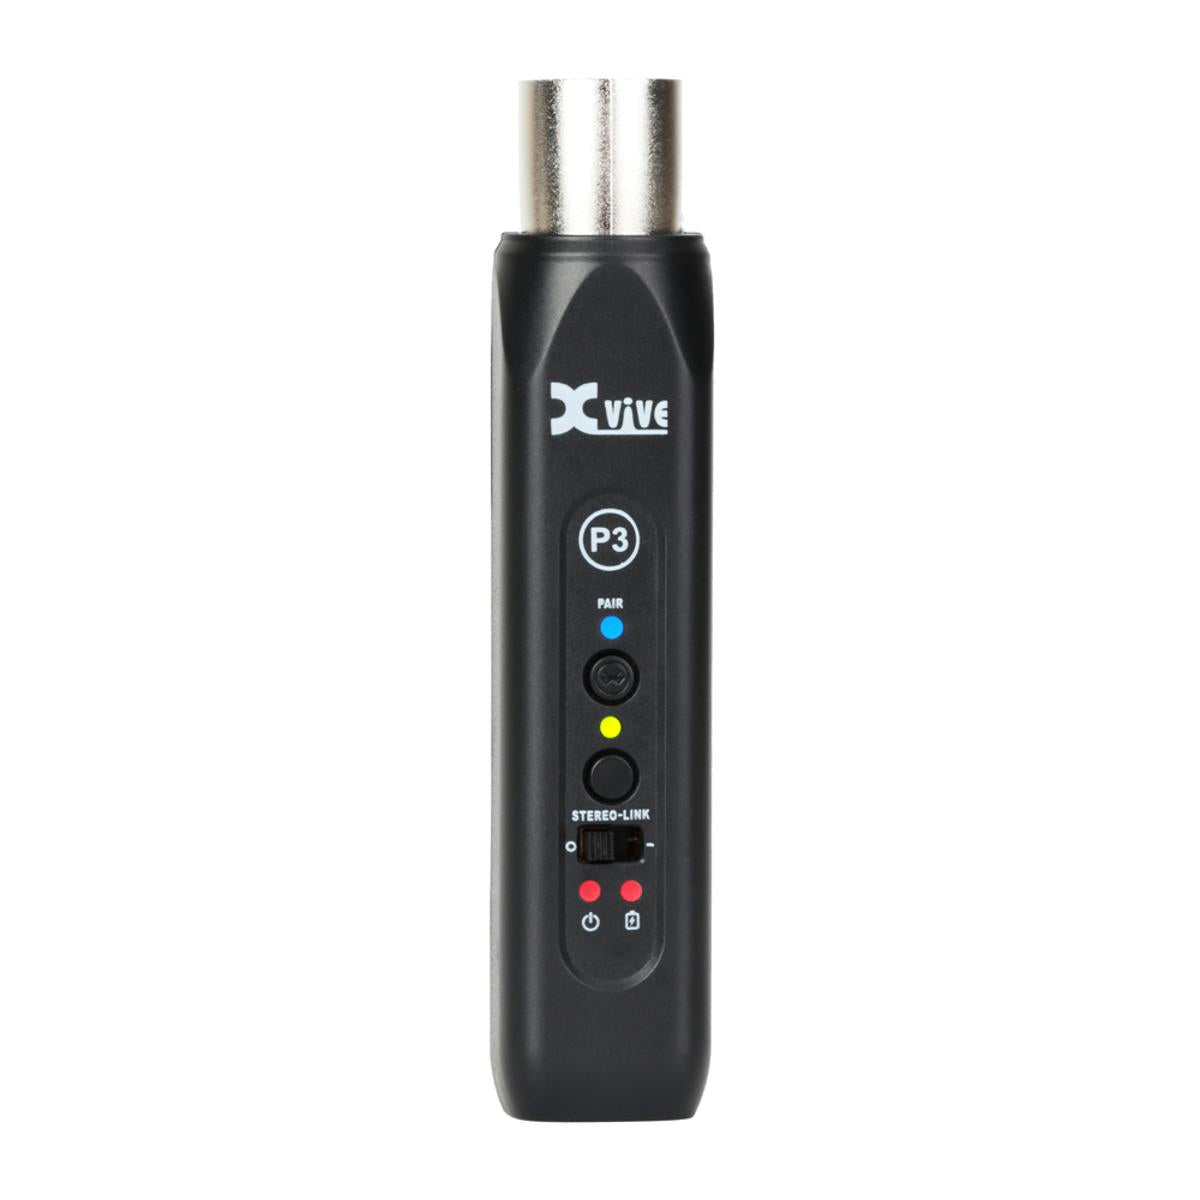 XVIVE P3 Bluetooth XLR Audio Receiver